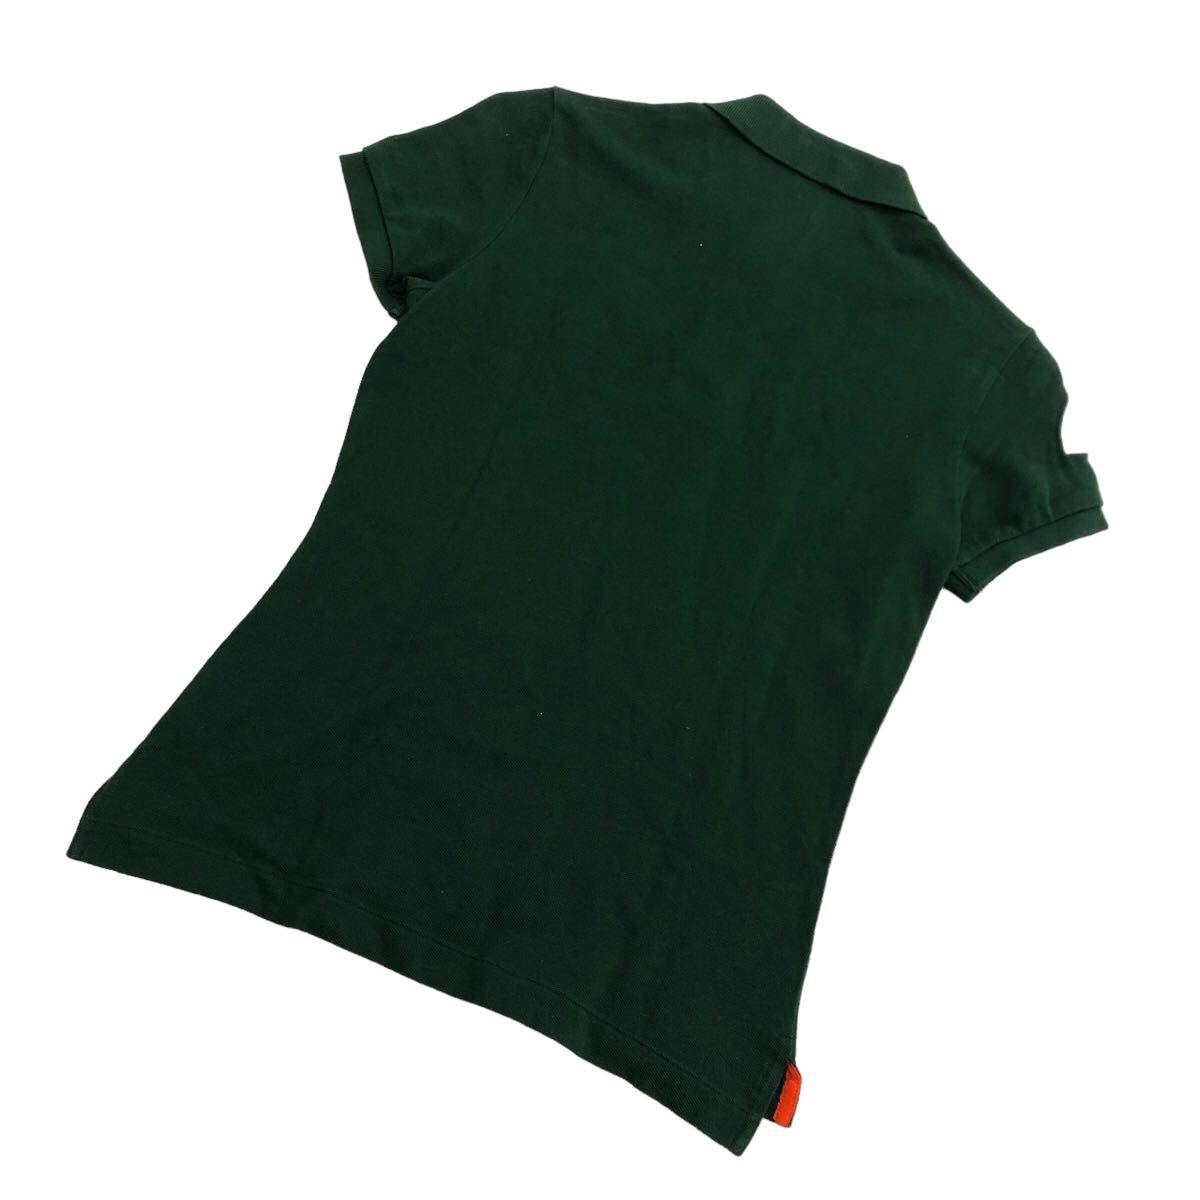 NS122 RALPH LAUREN Ralph Lauren skinny polo рубашка-поло футболка короткий рукав футболка tops хлопок 100% женский M зеленый 